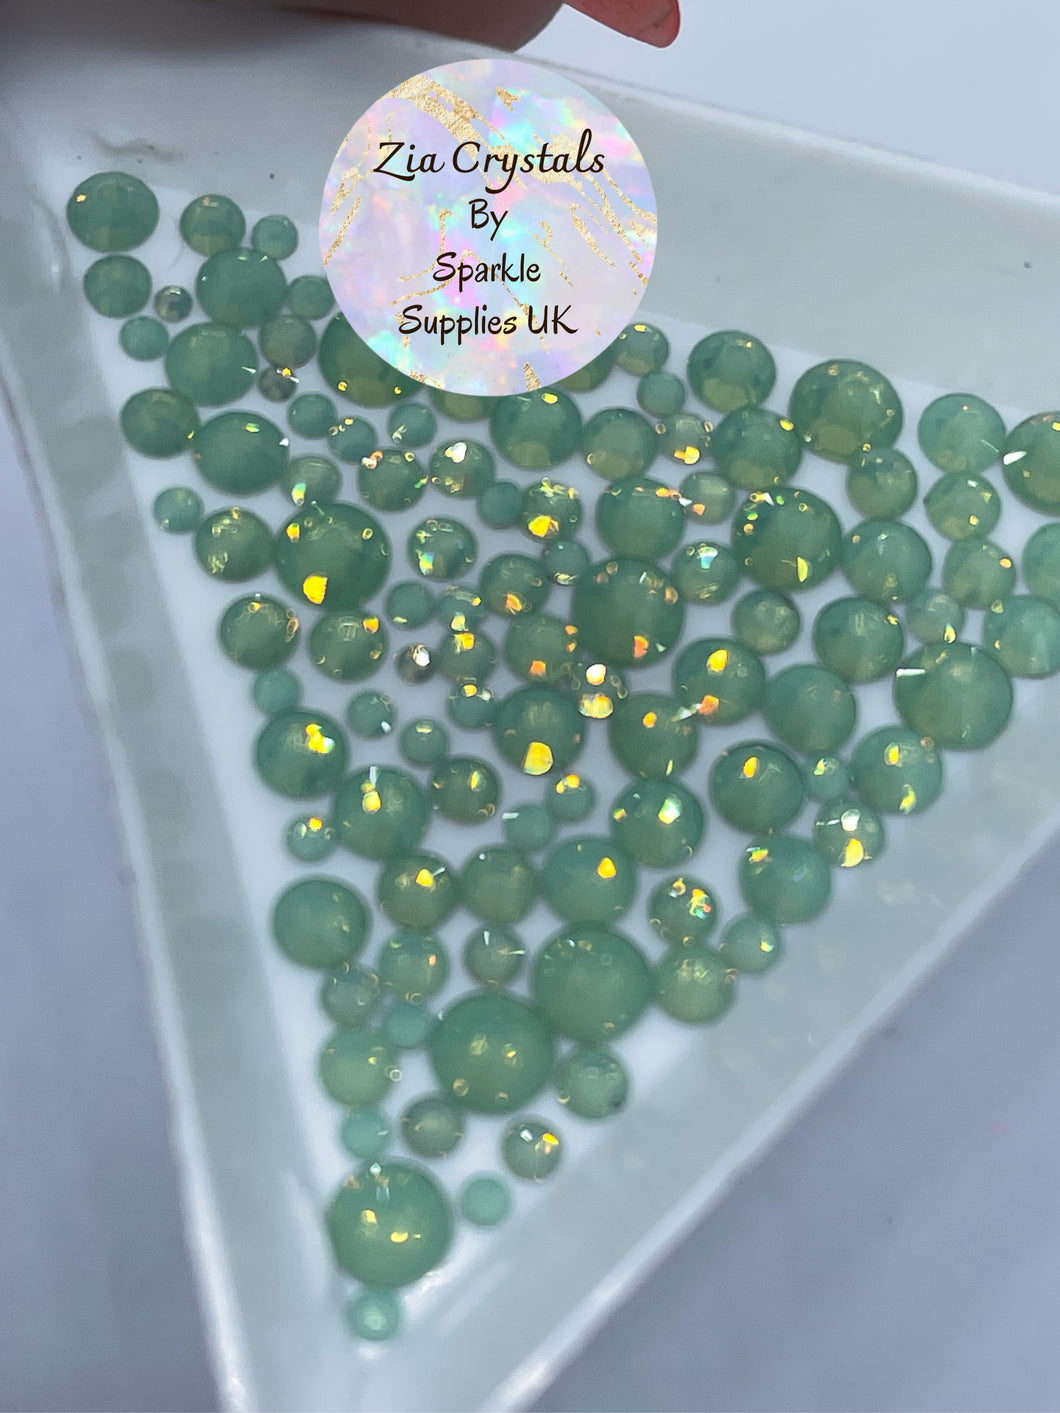 Zia Crystals - Mixed Mint Opals (6g Weight)